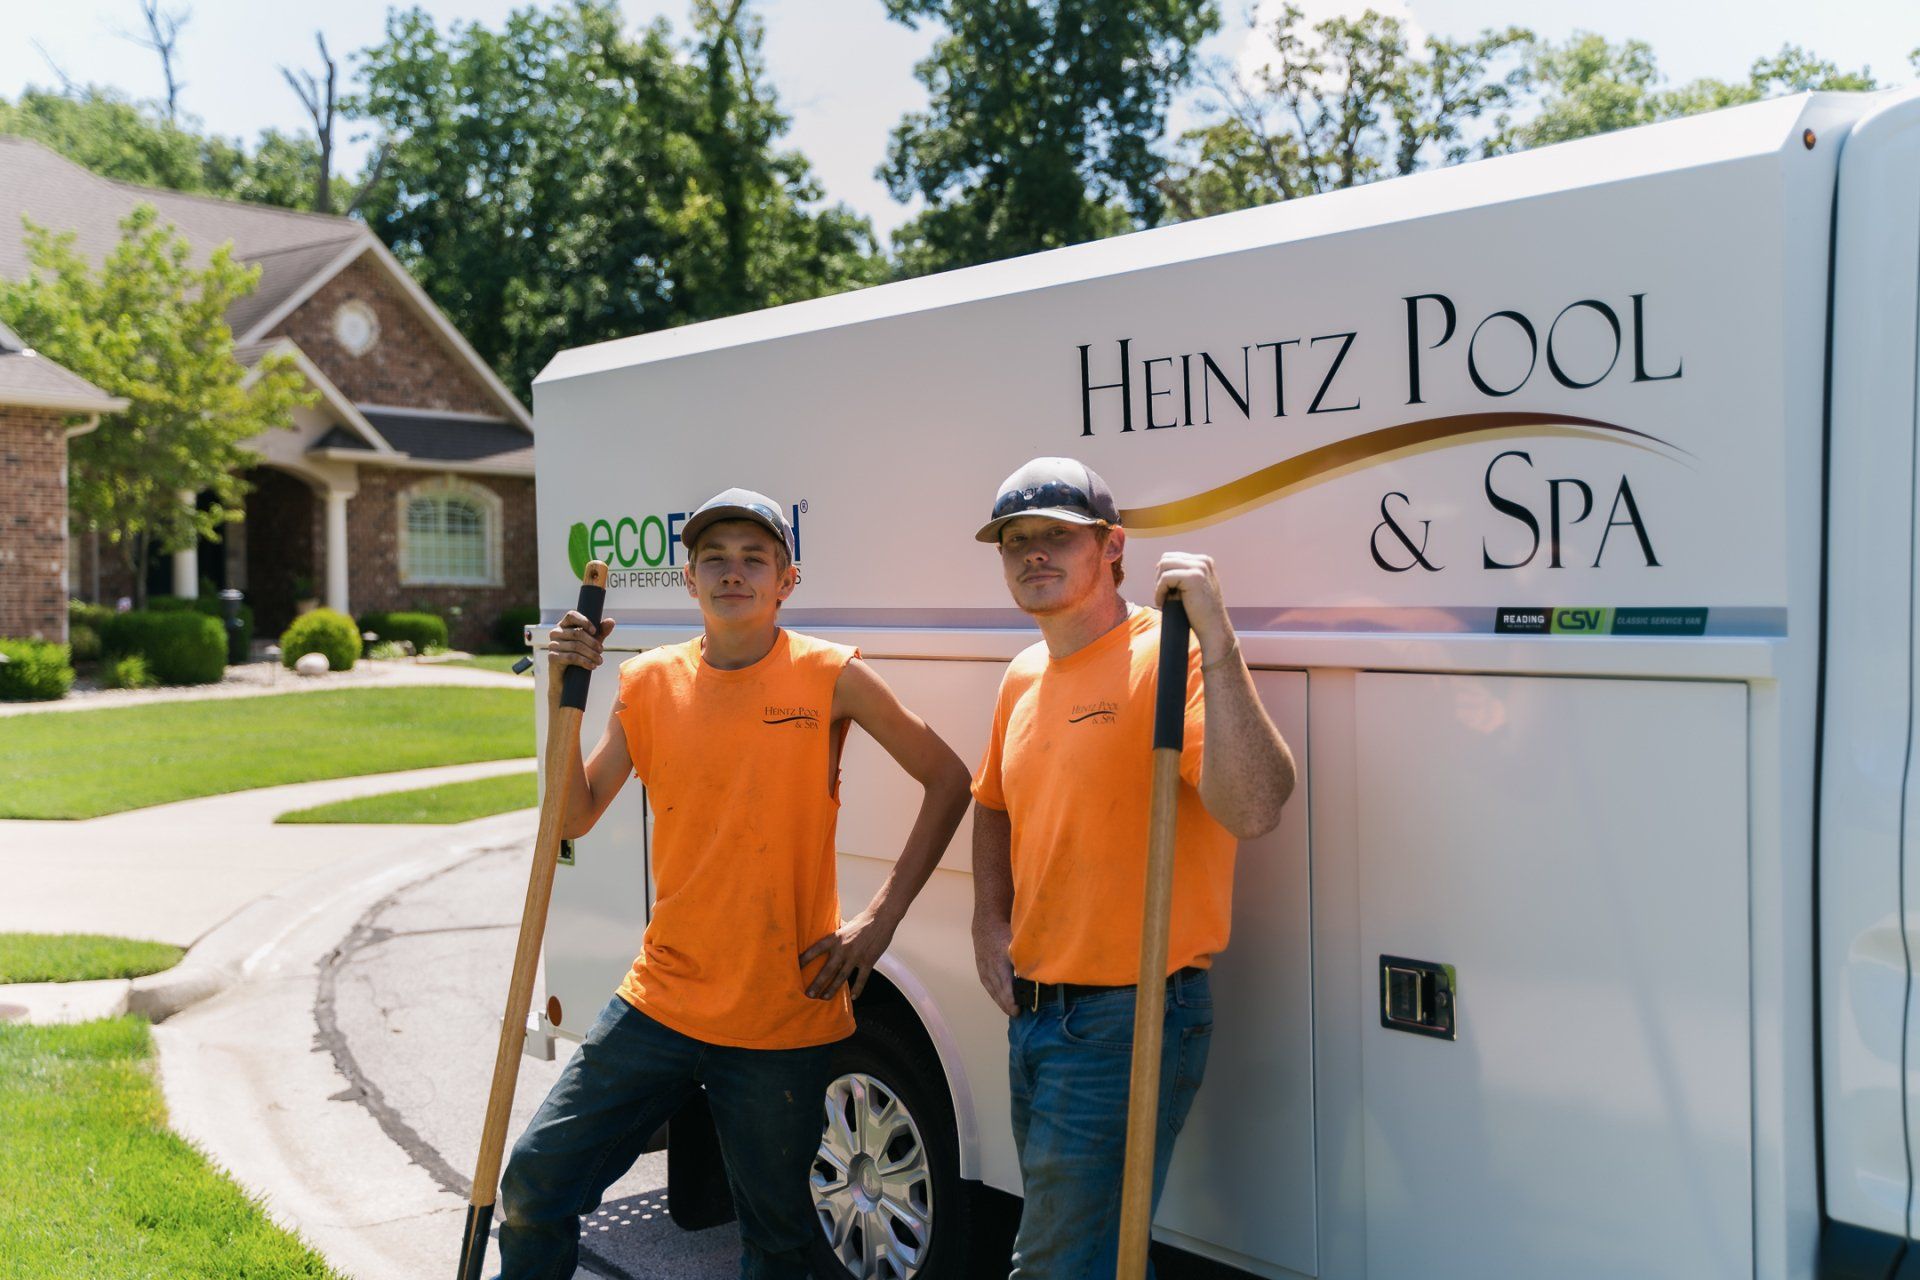 Two Heintz Pool & Spa member wearing orange uniform standing beside the company truck